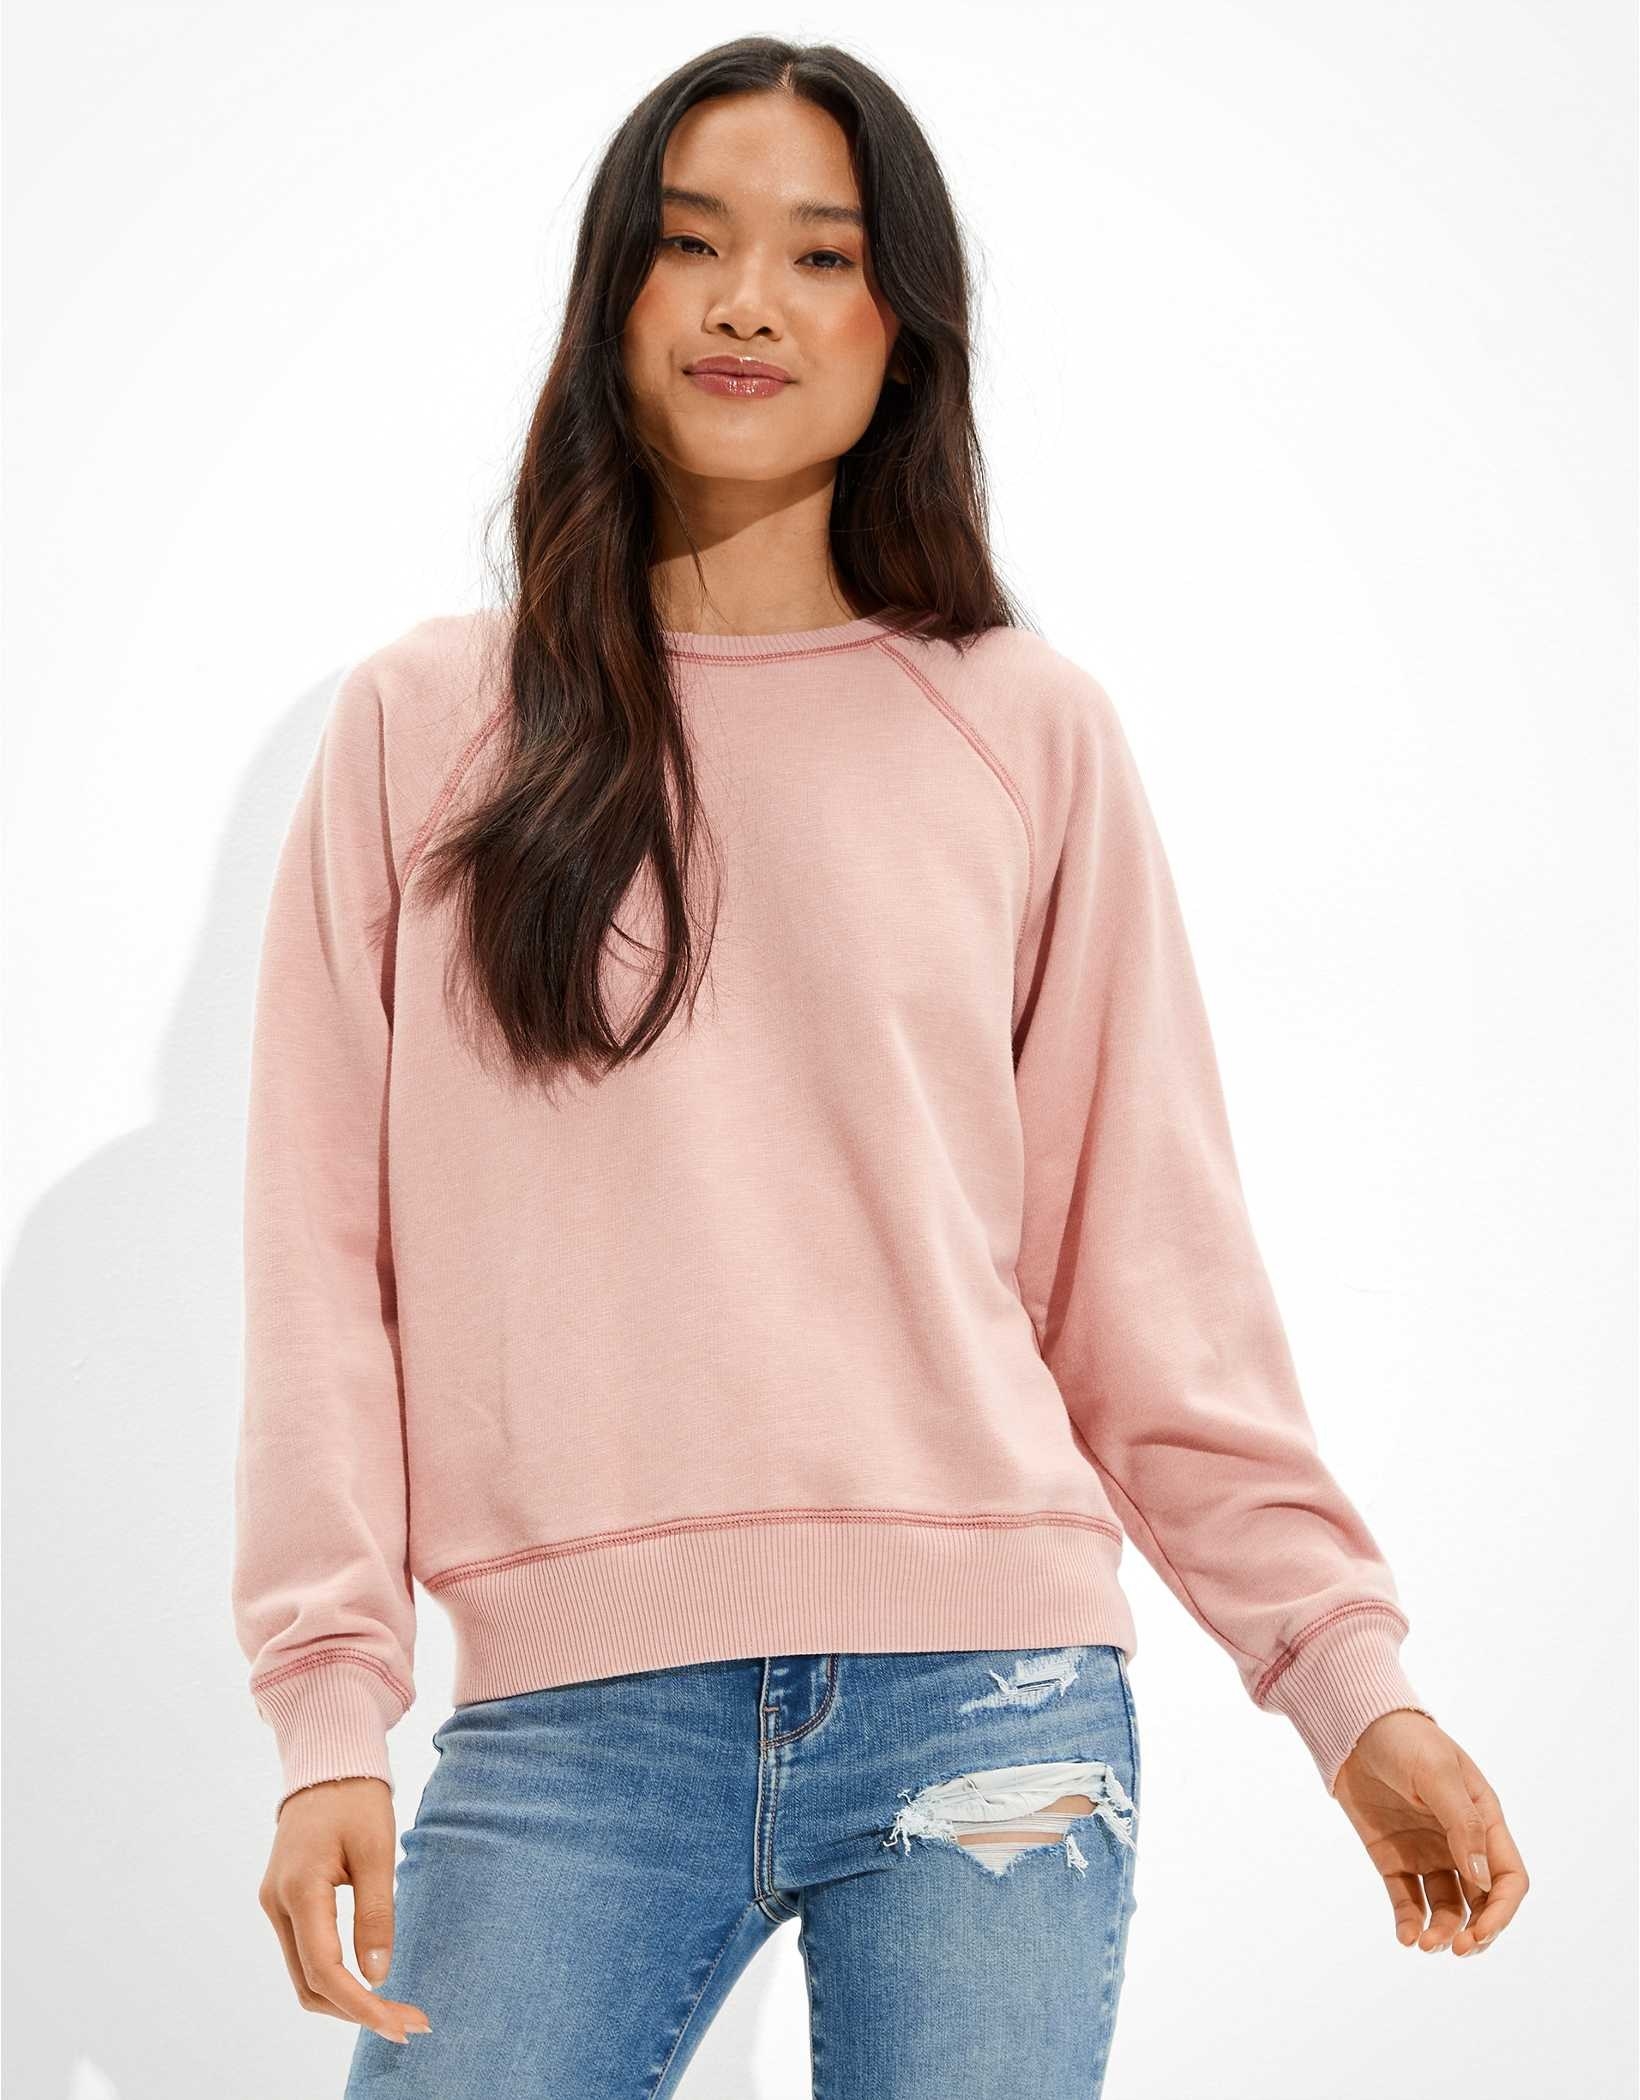 A model wearing a rose crew neck sweatshirt